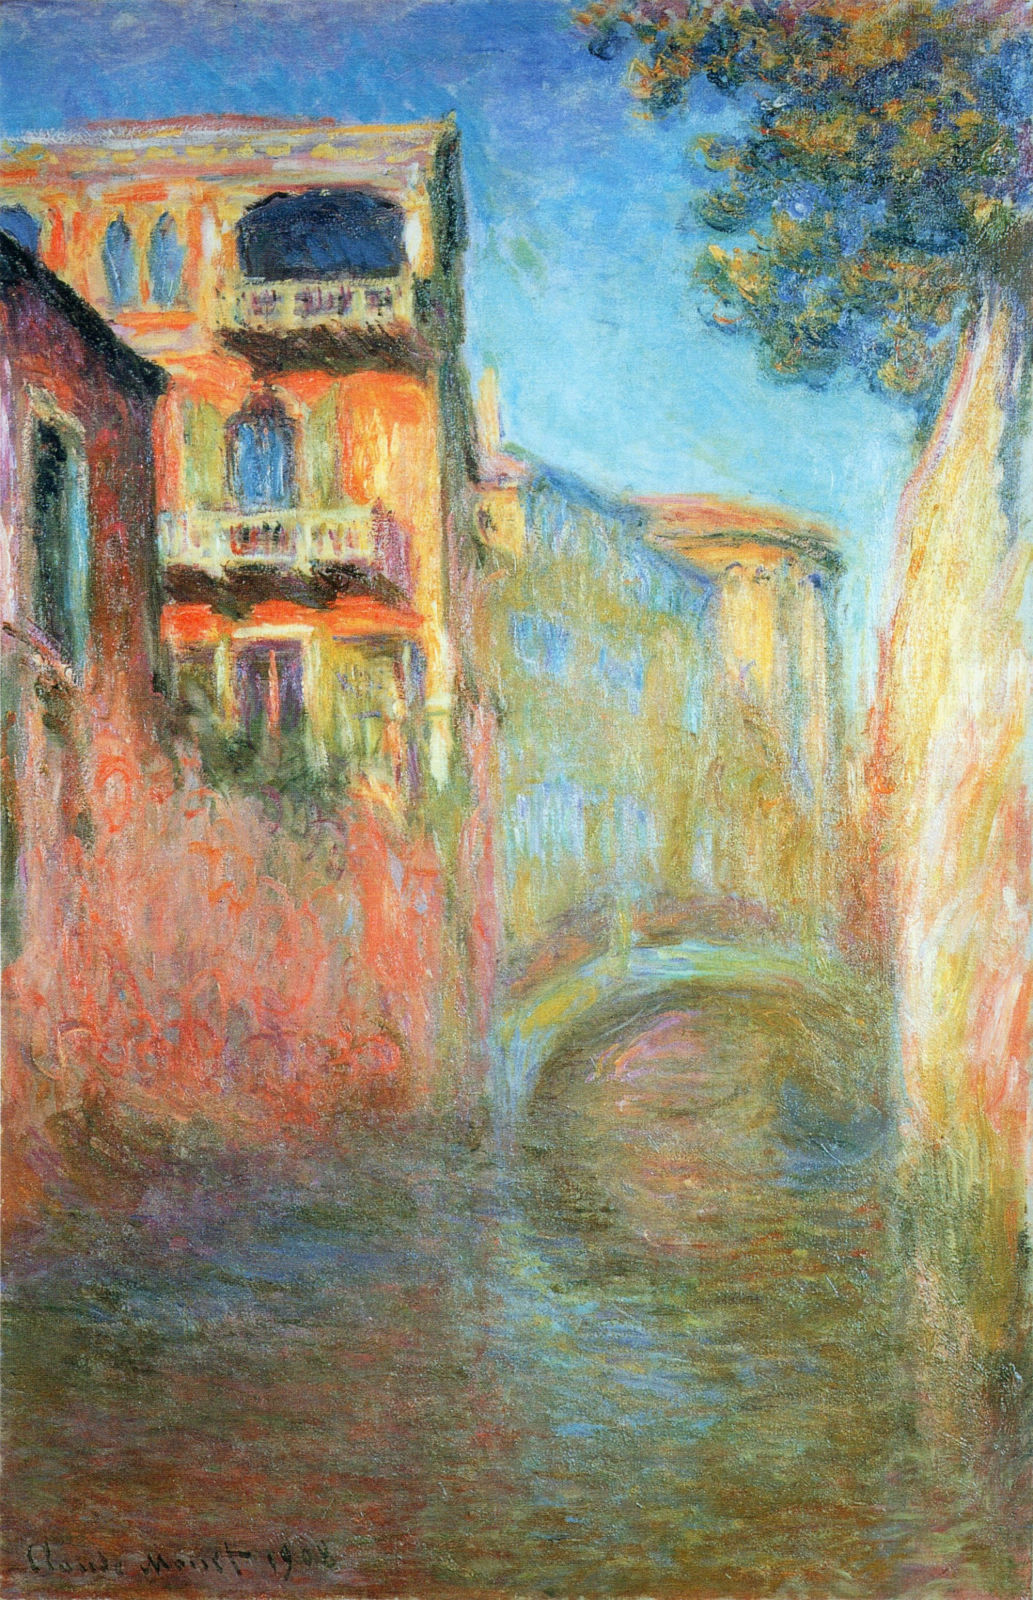 Claude+Monet-1840-1926 (613).jpg